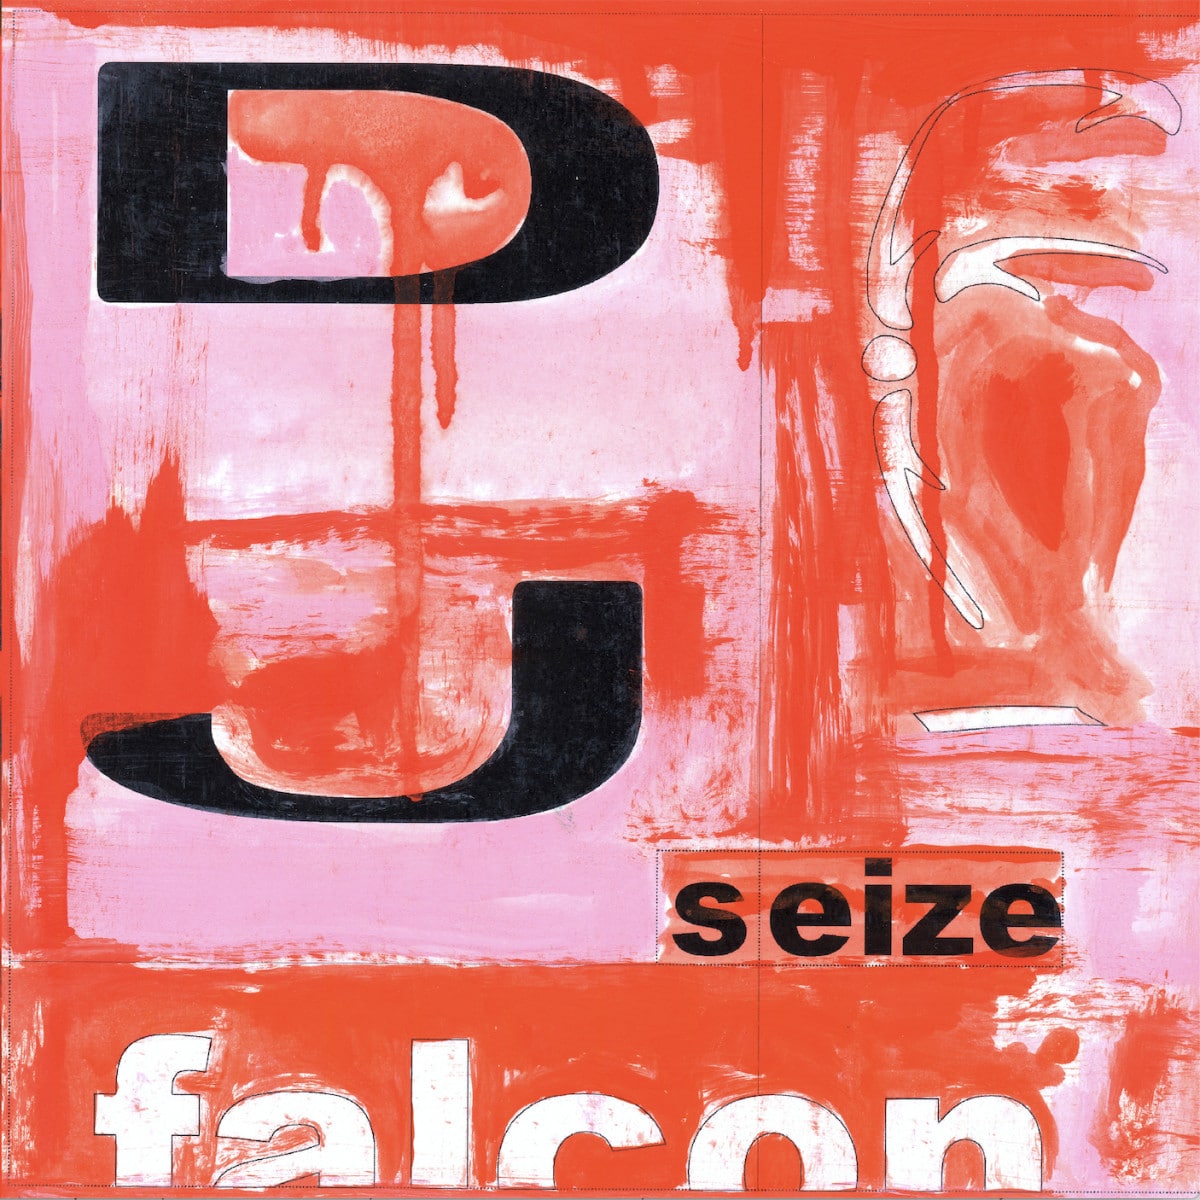 DJ Falcon - Sugar Dada - FATA02 - ASSOCIATION FATALE